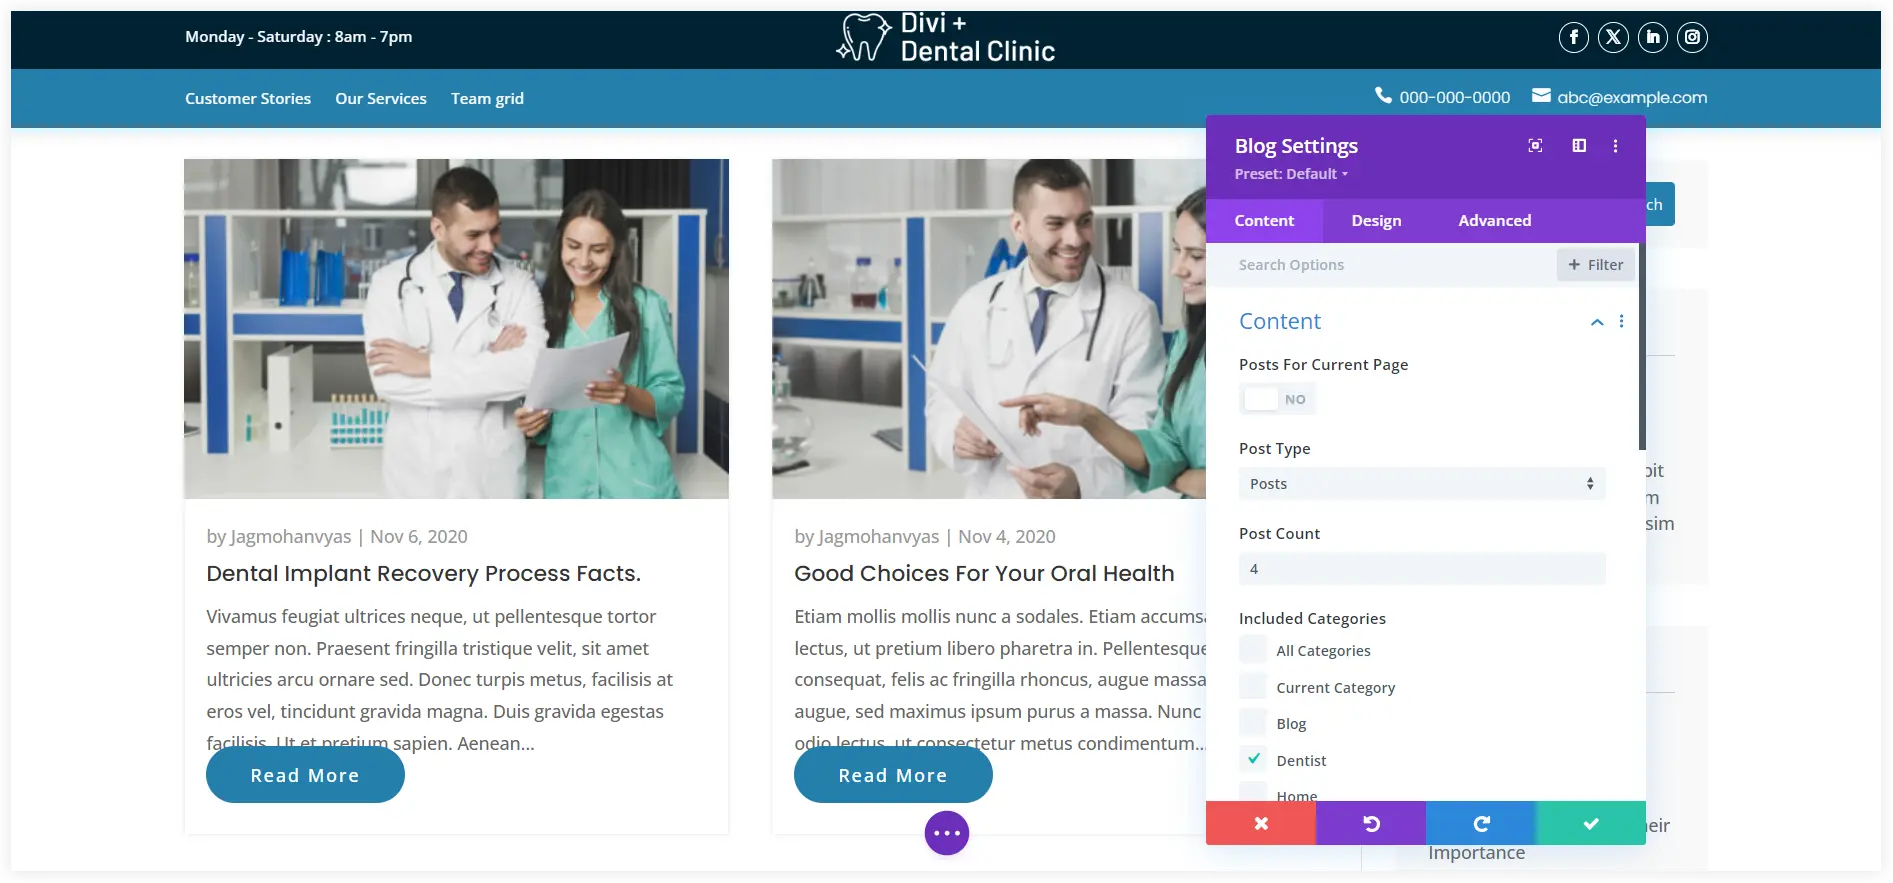 Divi dental theme layout